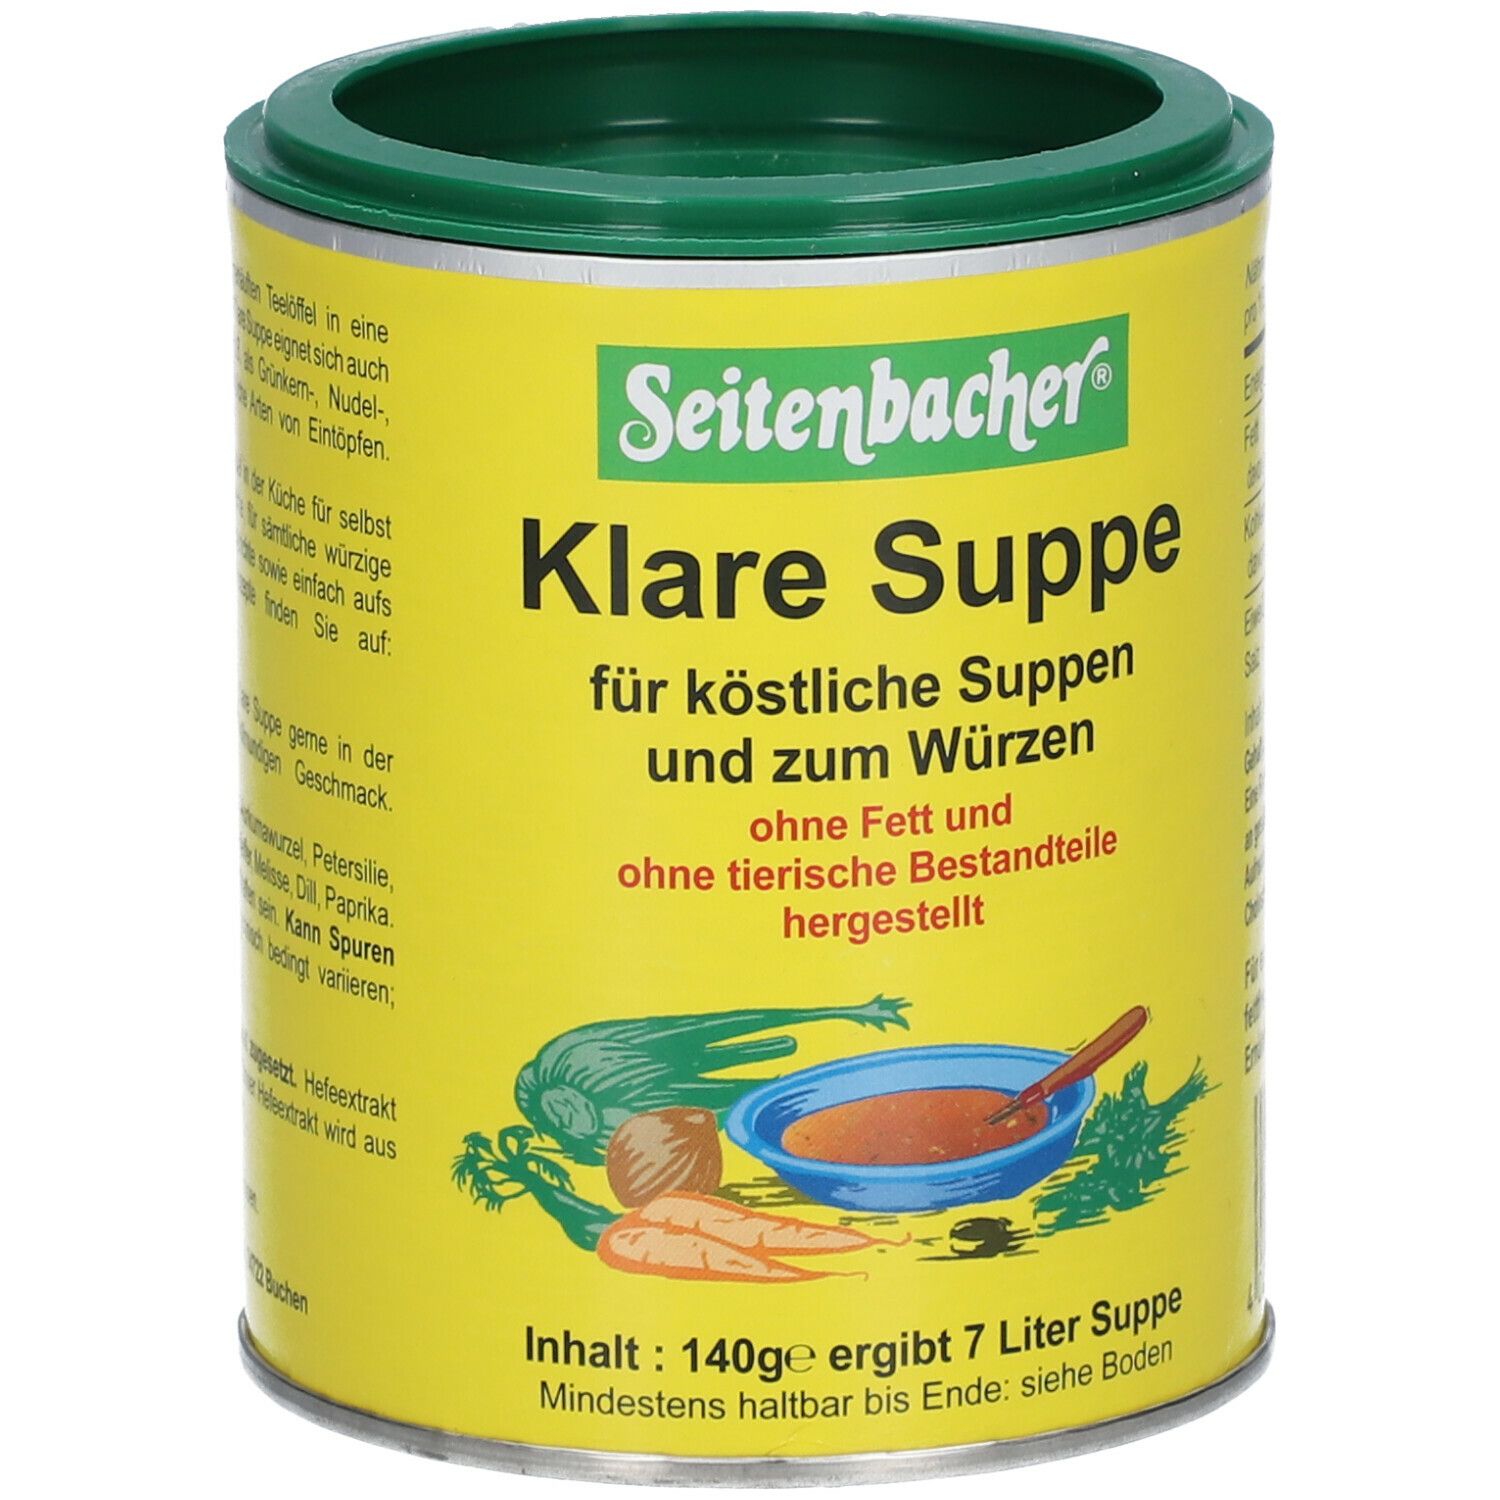 Seitenbacher® Klare Suppe